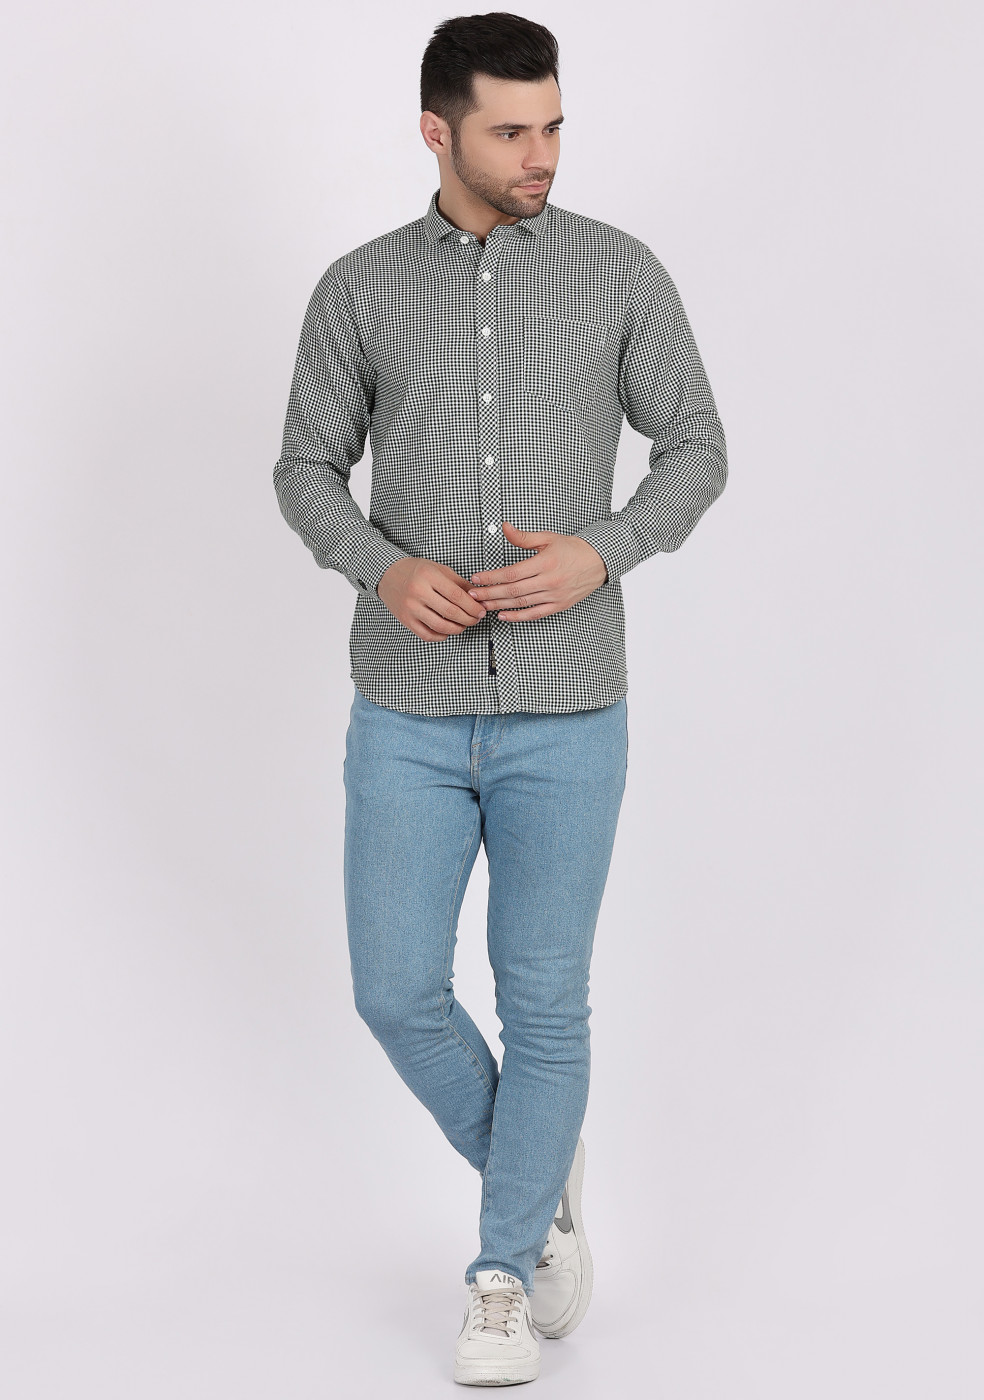 ASHTOM Olive Color Small Check Shirt For Men